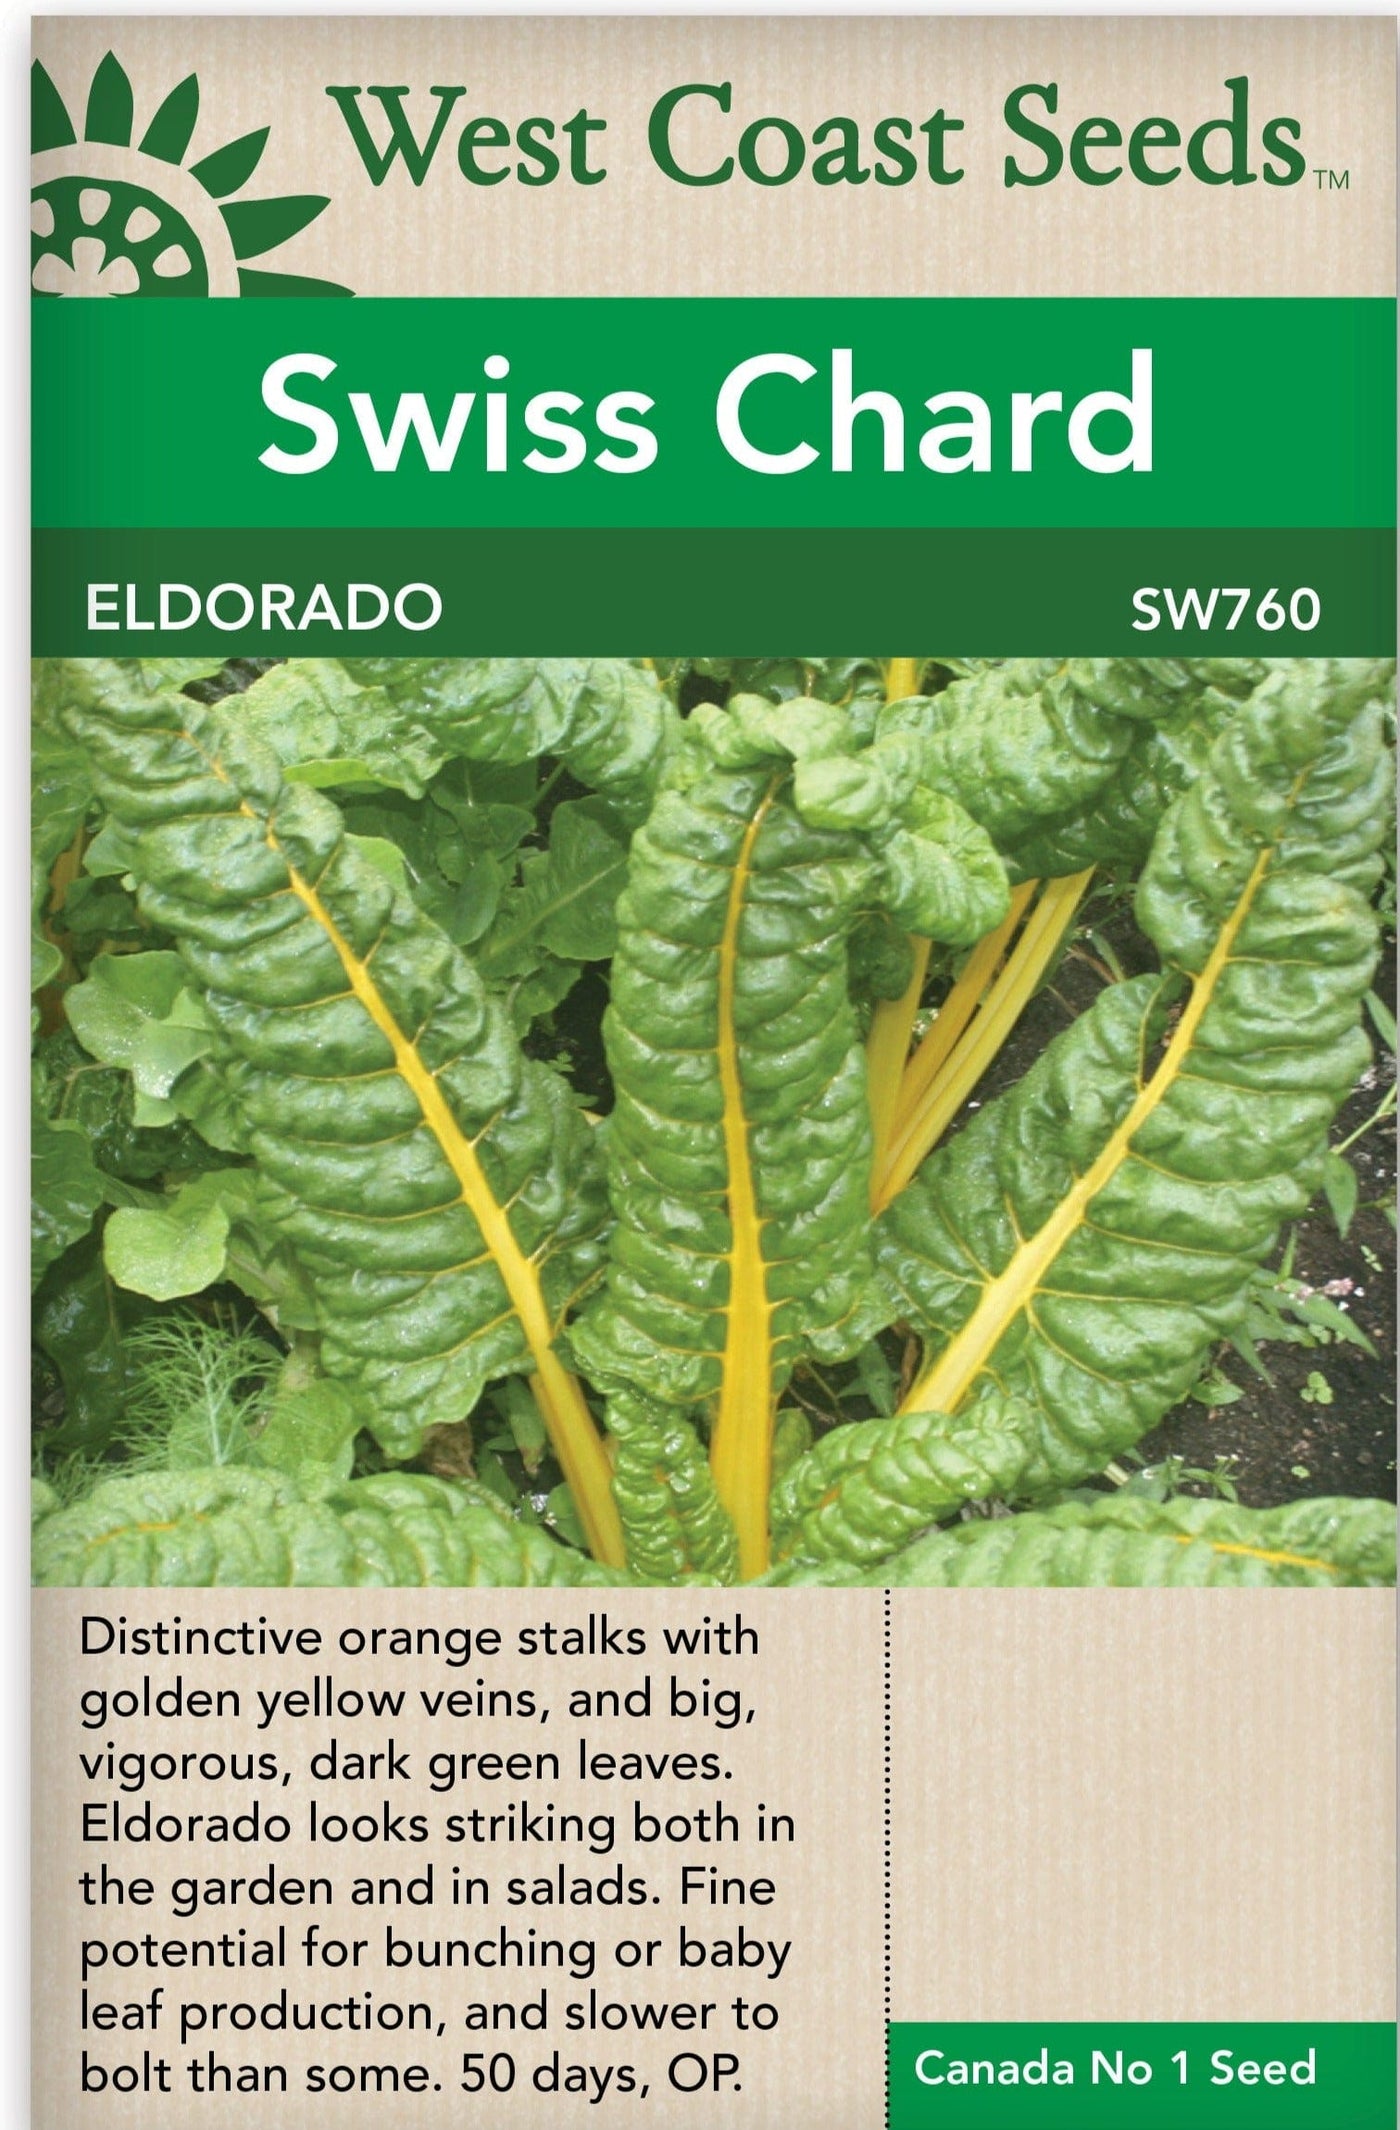 Swiss Chard Eldorado - West Coast Seeds